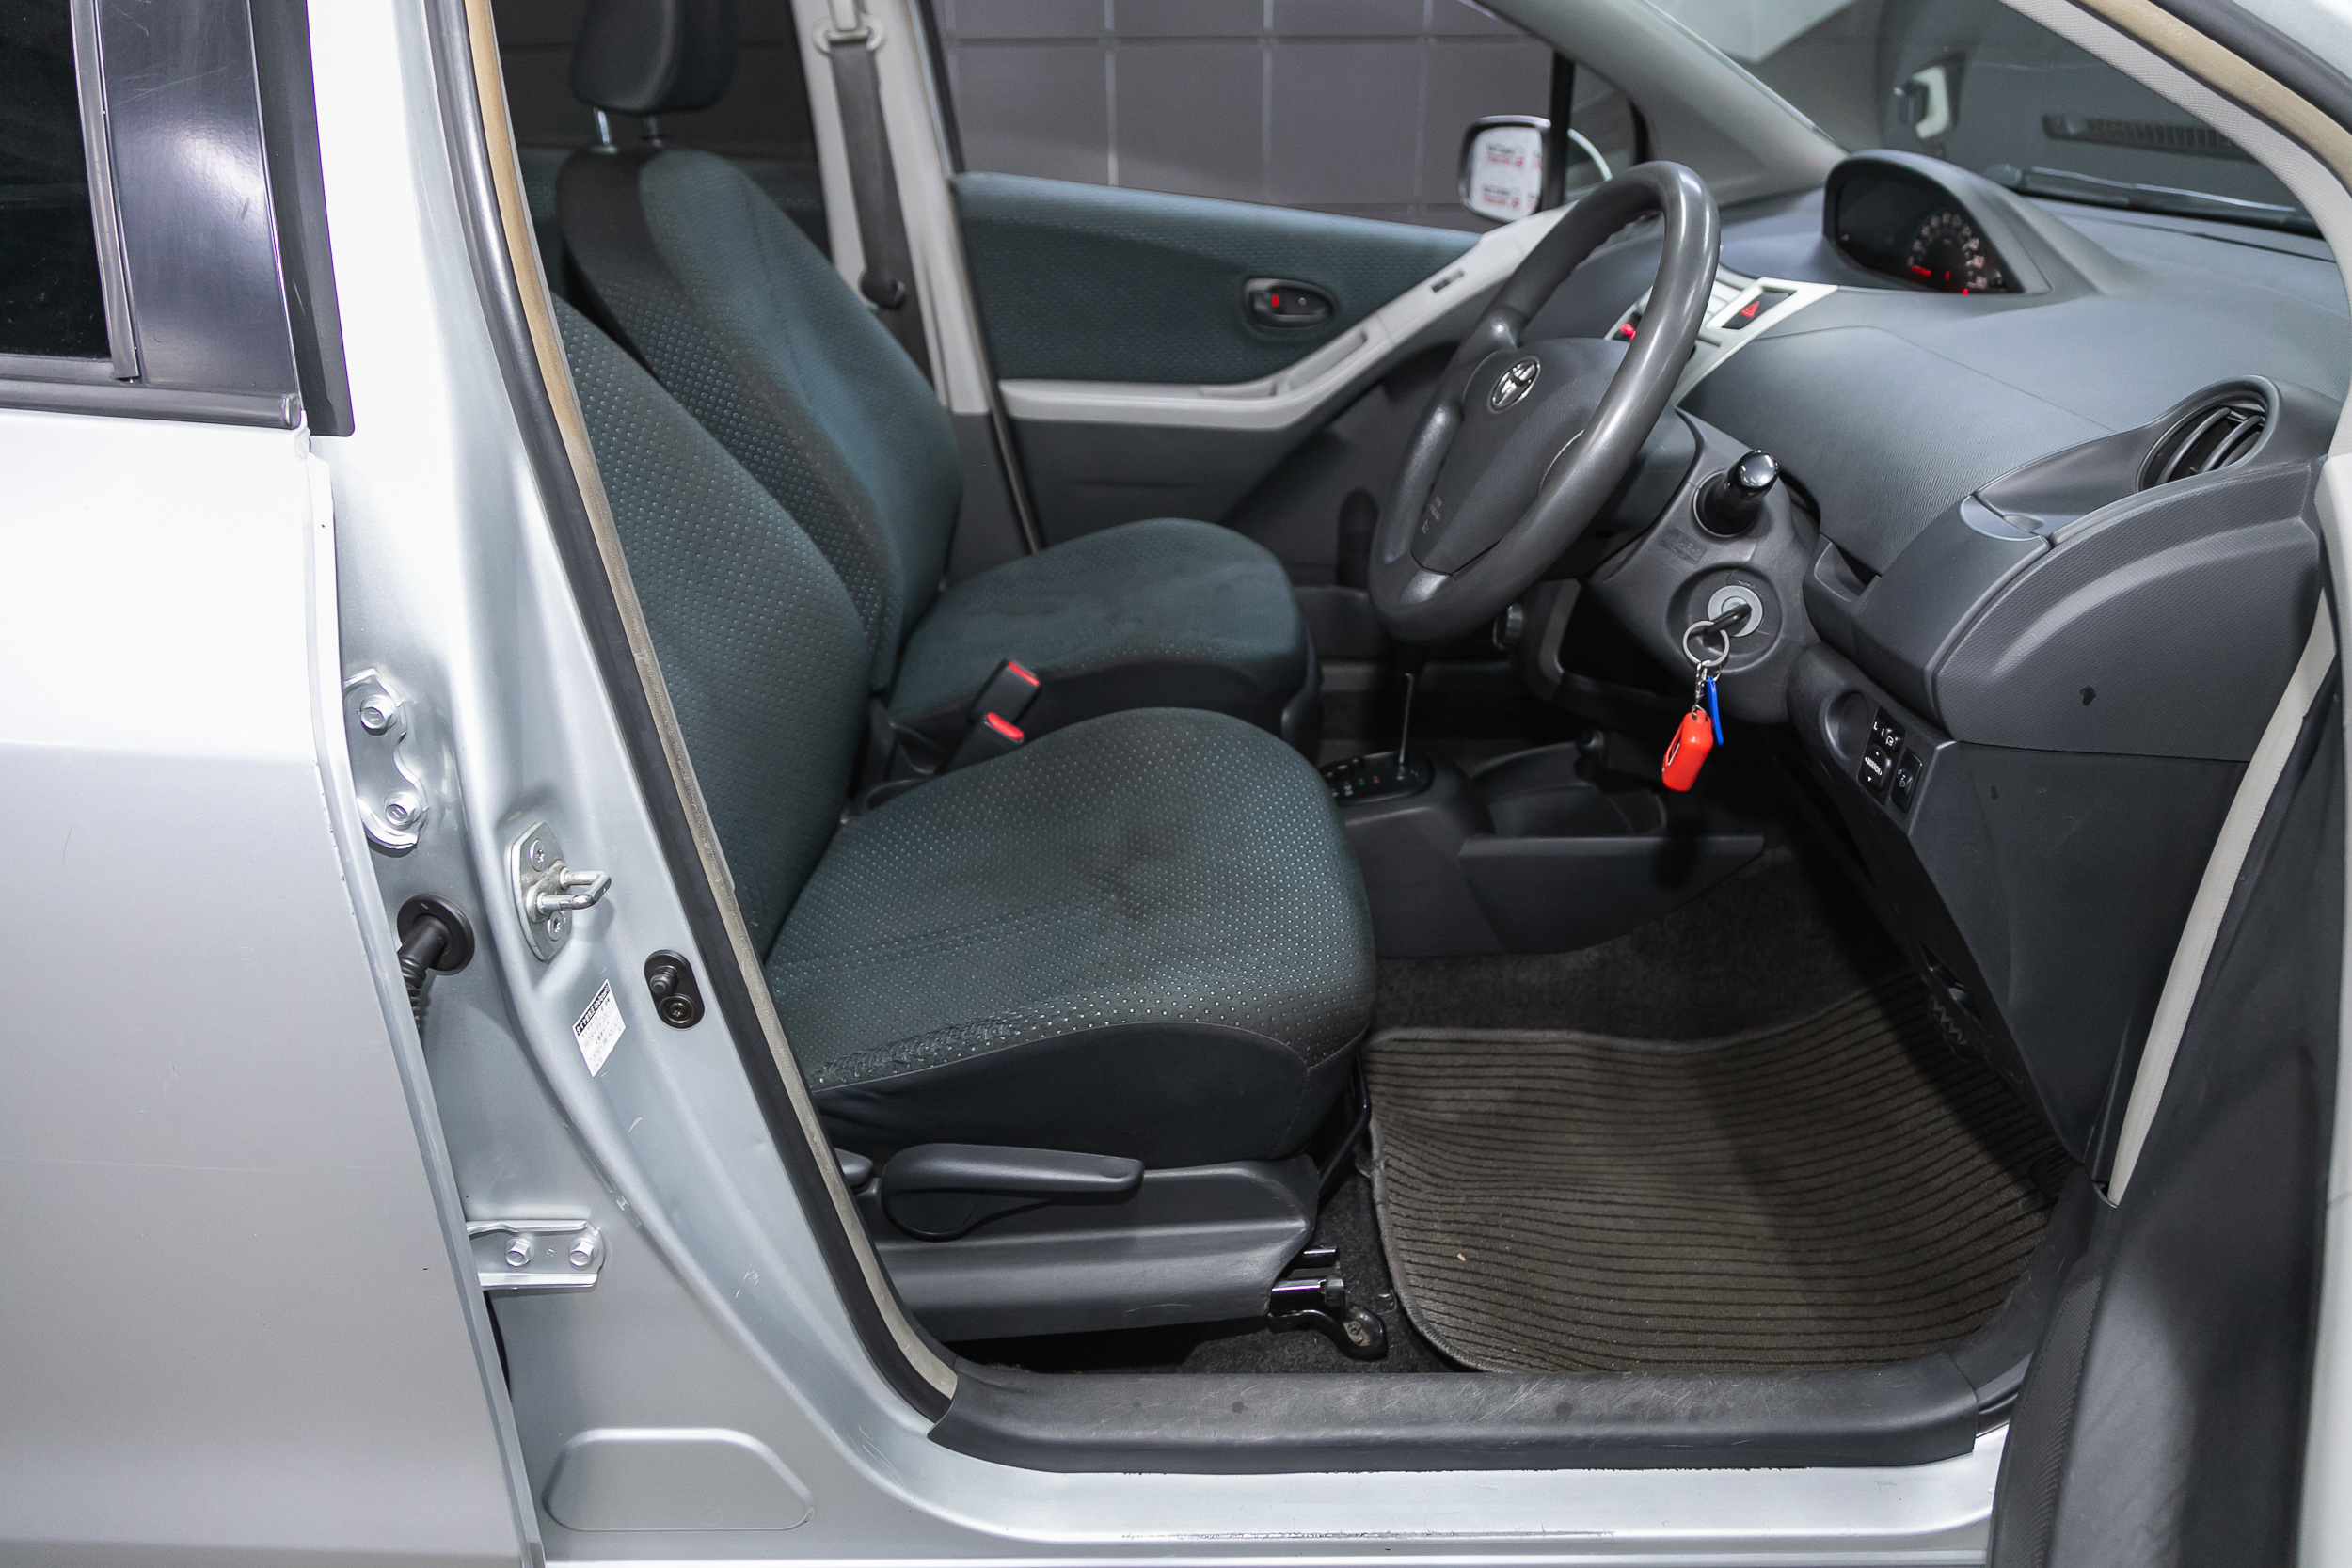 Toyota Vitz front interior